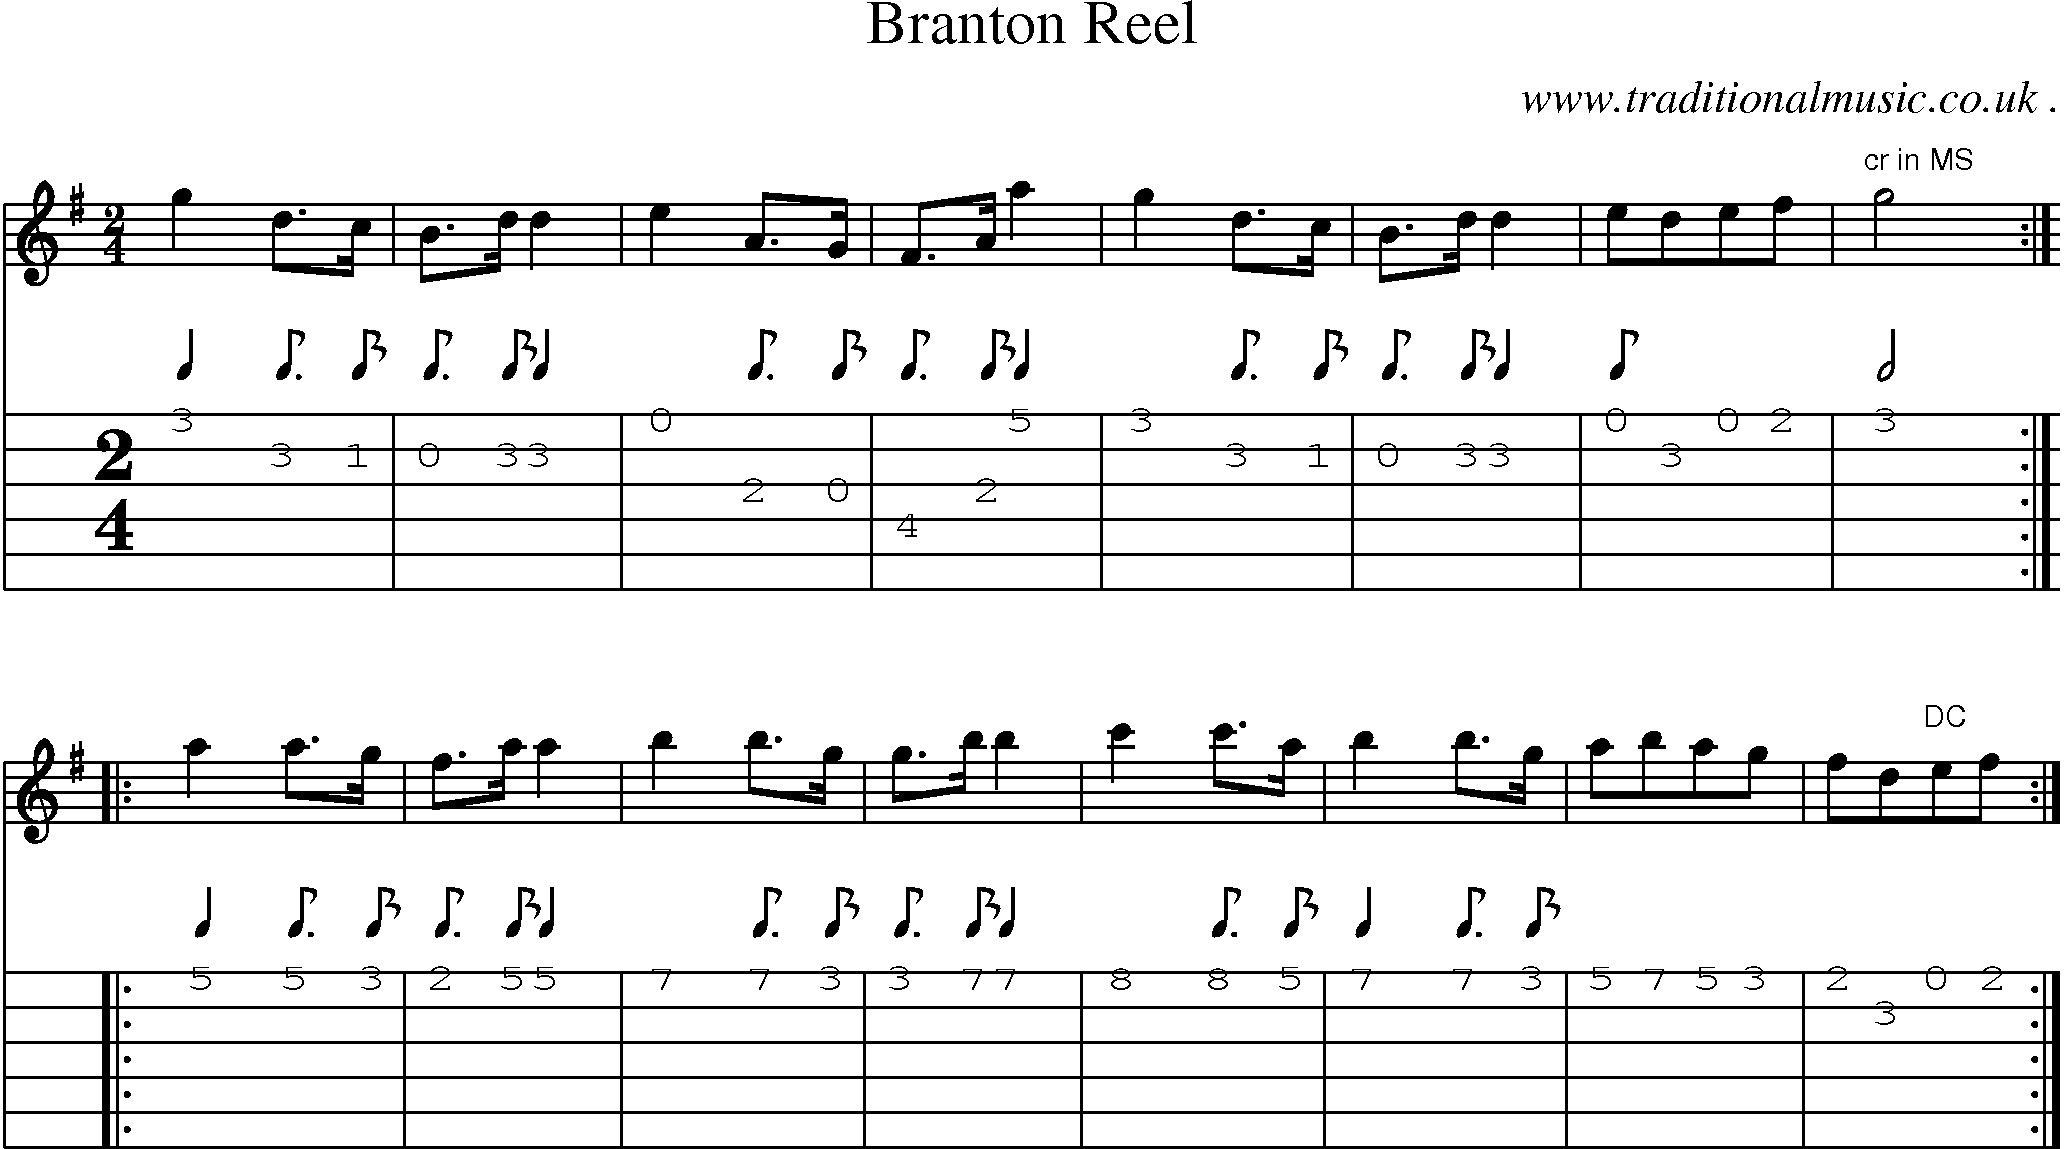 Sheet-Music and Guitar Tabs for Branton Reel